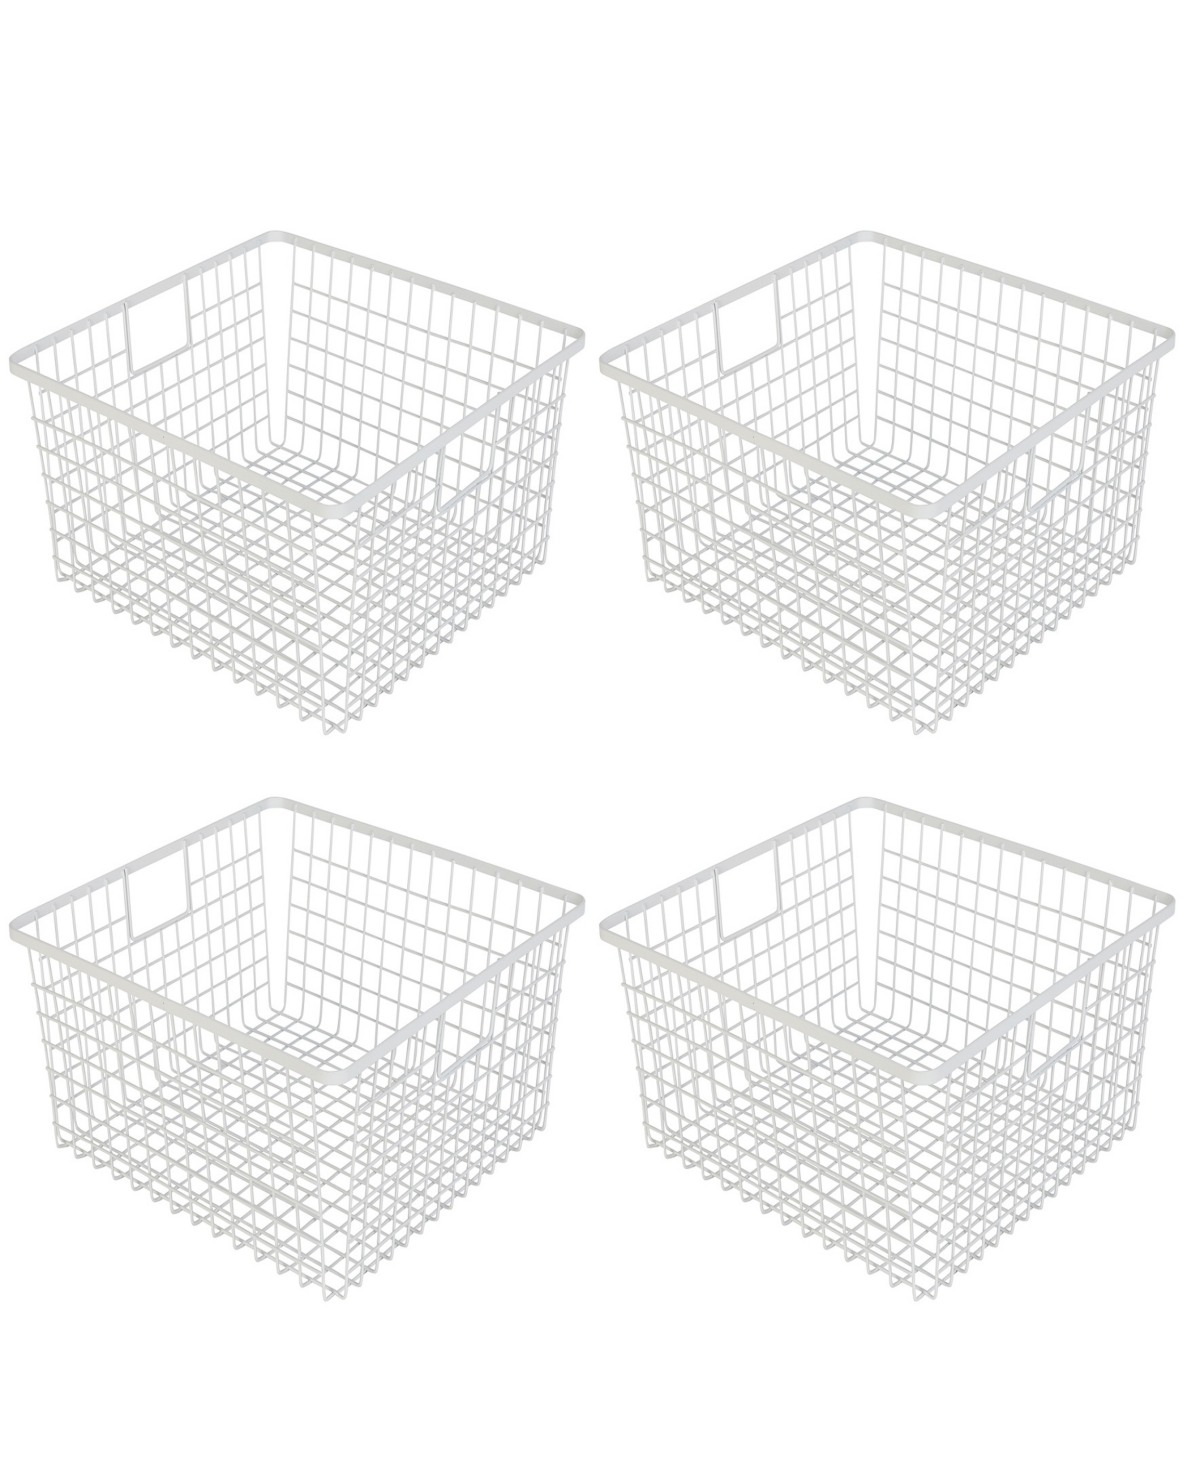 Nestable 9" x 16" x 6" Basket Organizer with Handles, Set of 4 - White